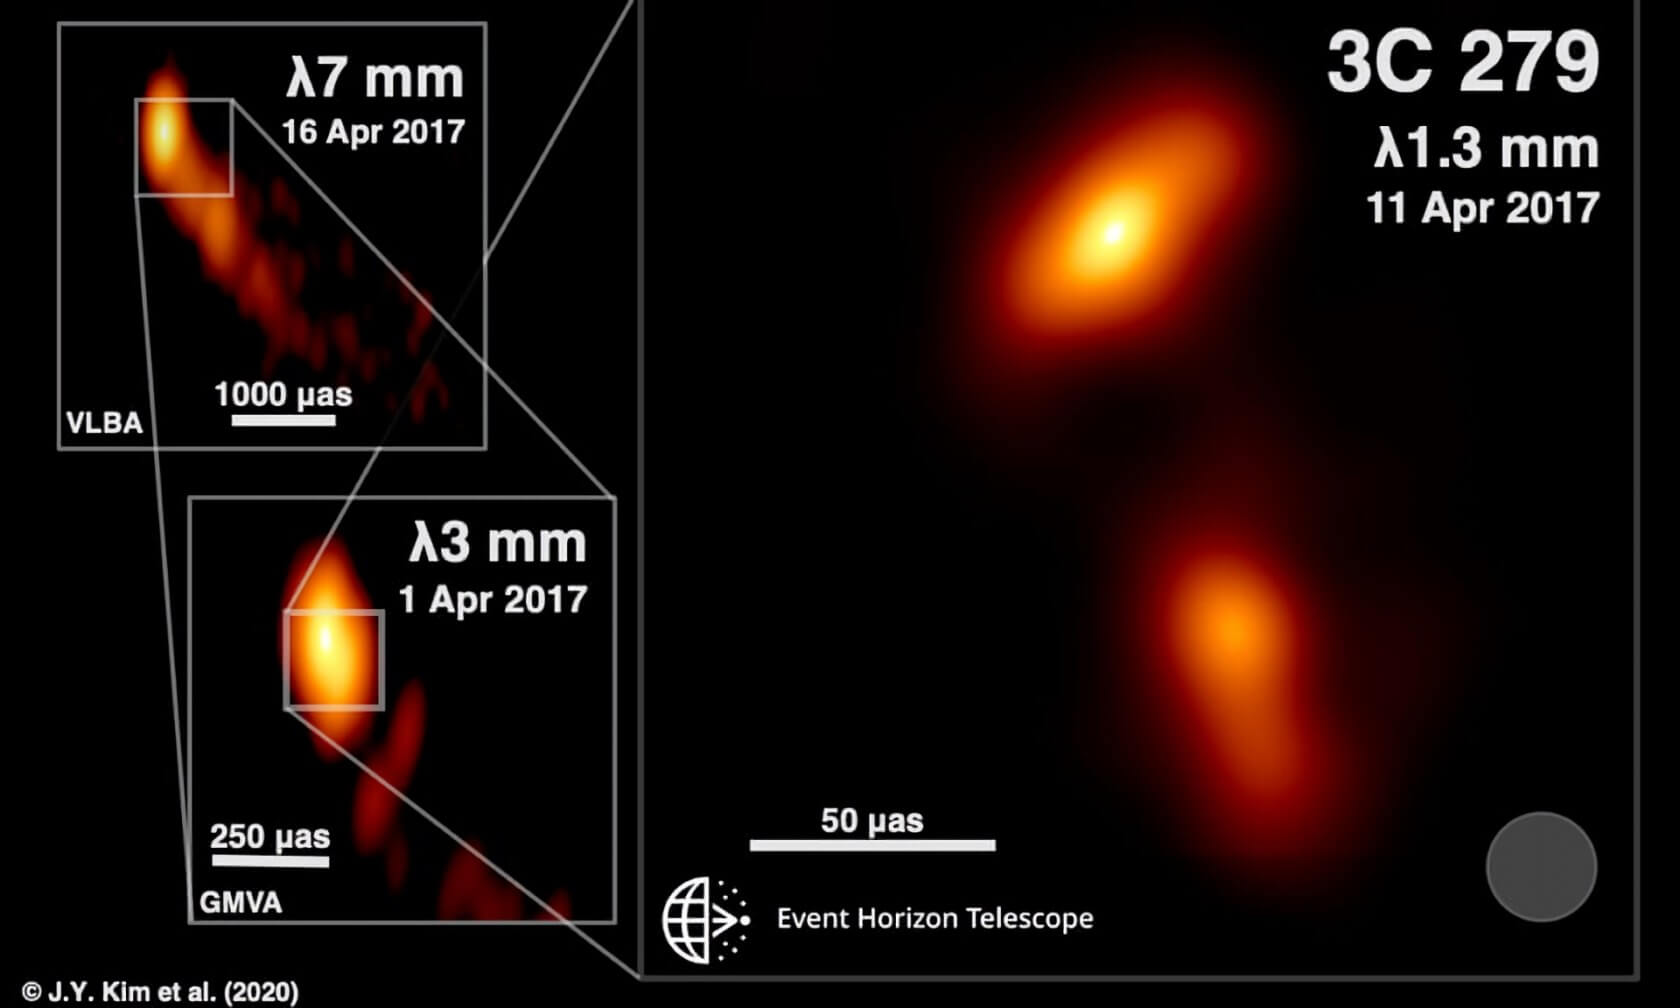 Event Horizon Telescope captures image of a black hole's plasma jets